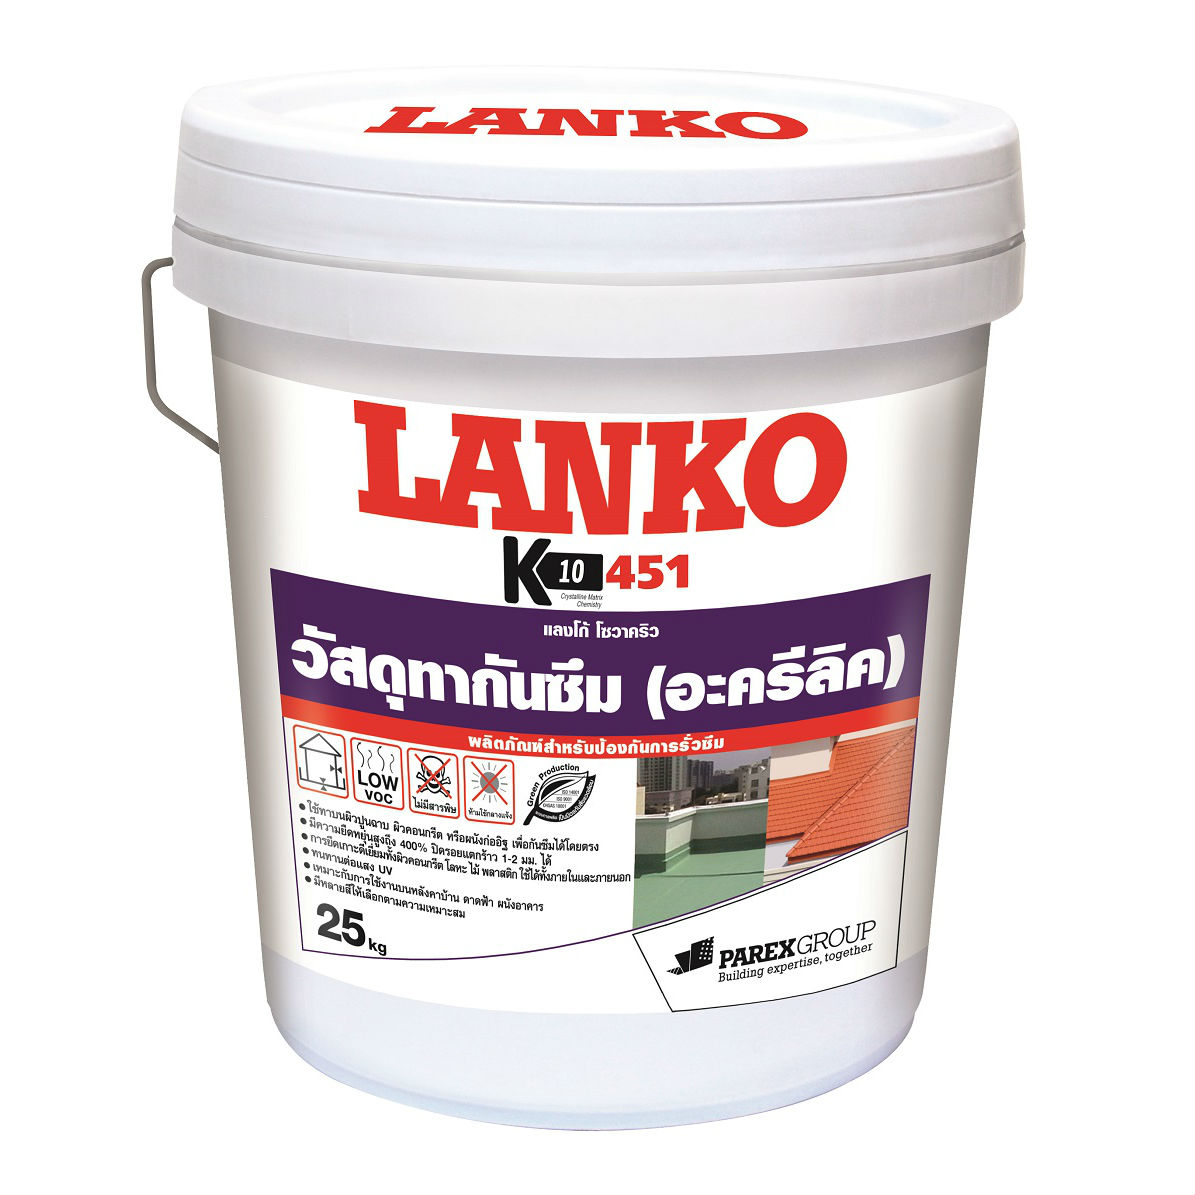 Lanko 451 Roofseal, 25 kg/pail